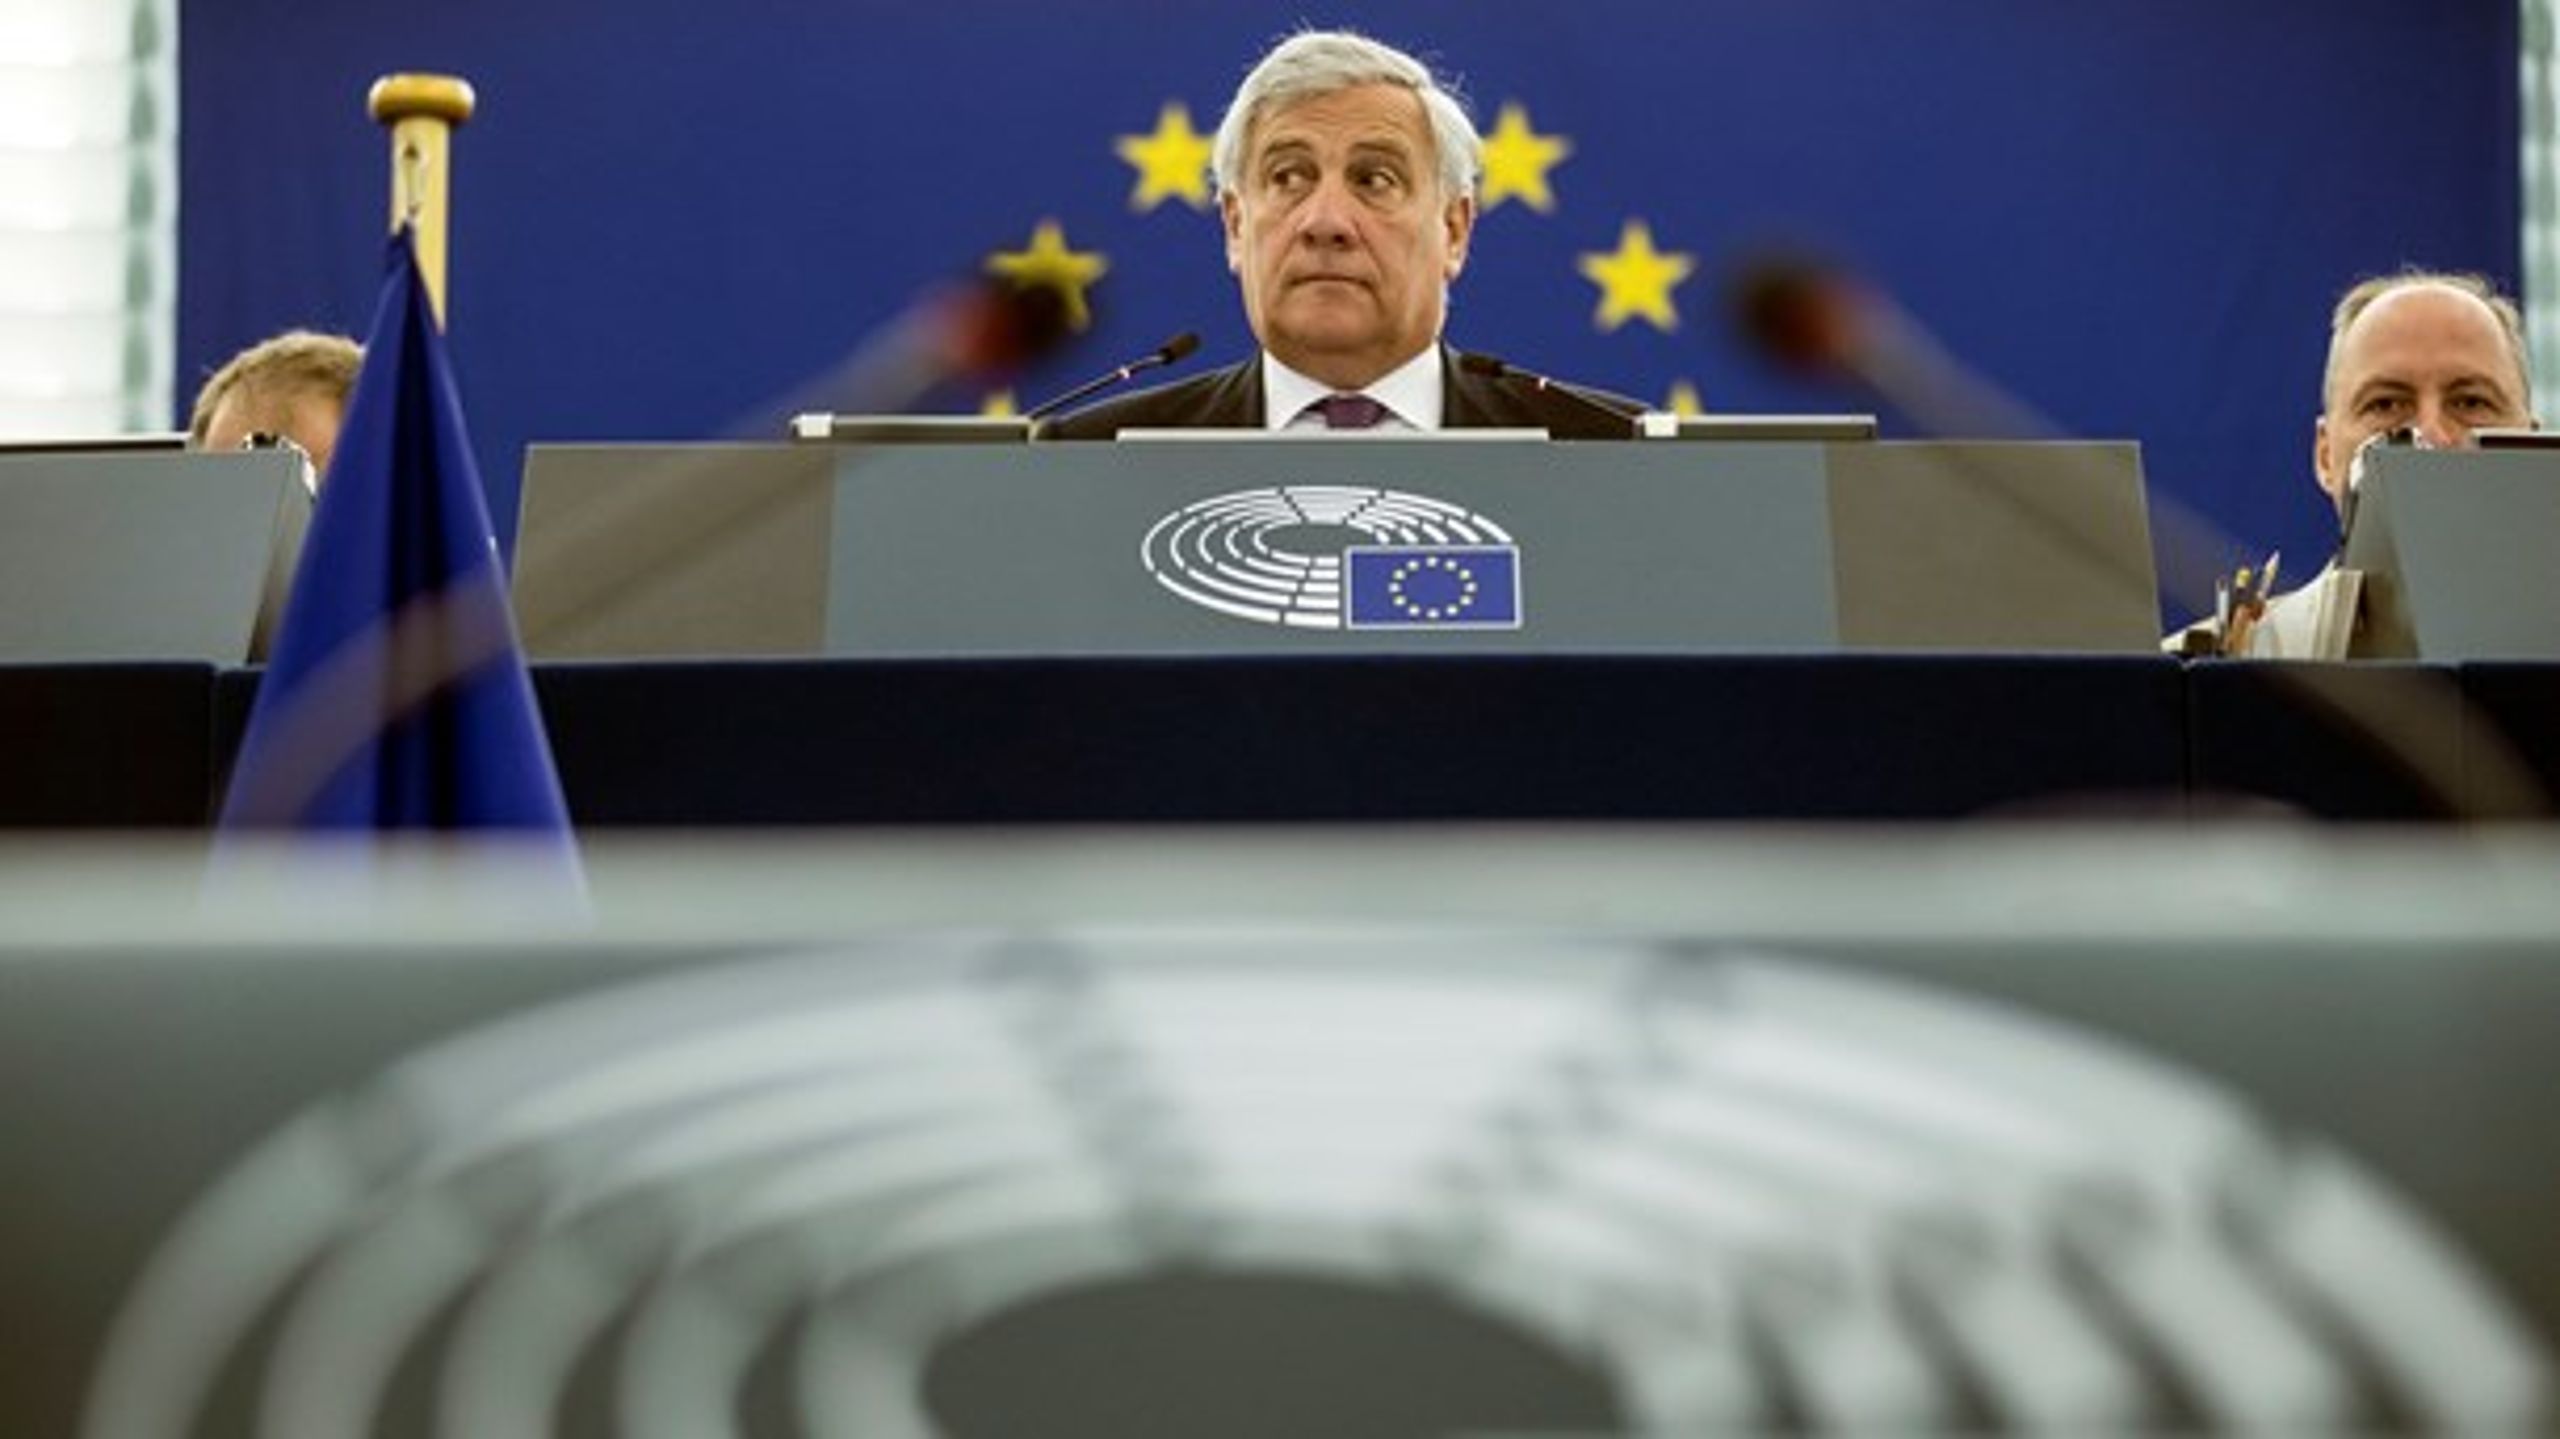 70 prominente folk advarede Europa-Parlamentets præsident Antonio Tajani om copyrightdirektivets konsekvenser, som EU’s lovgivere burde have forudset, mener Digitaleurope.